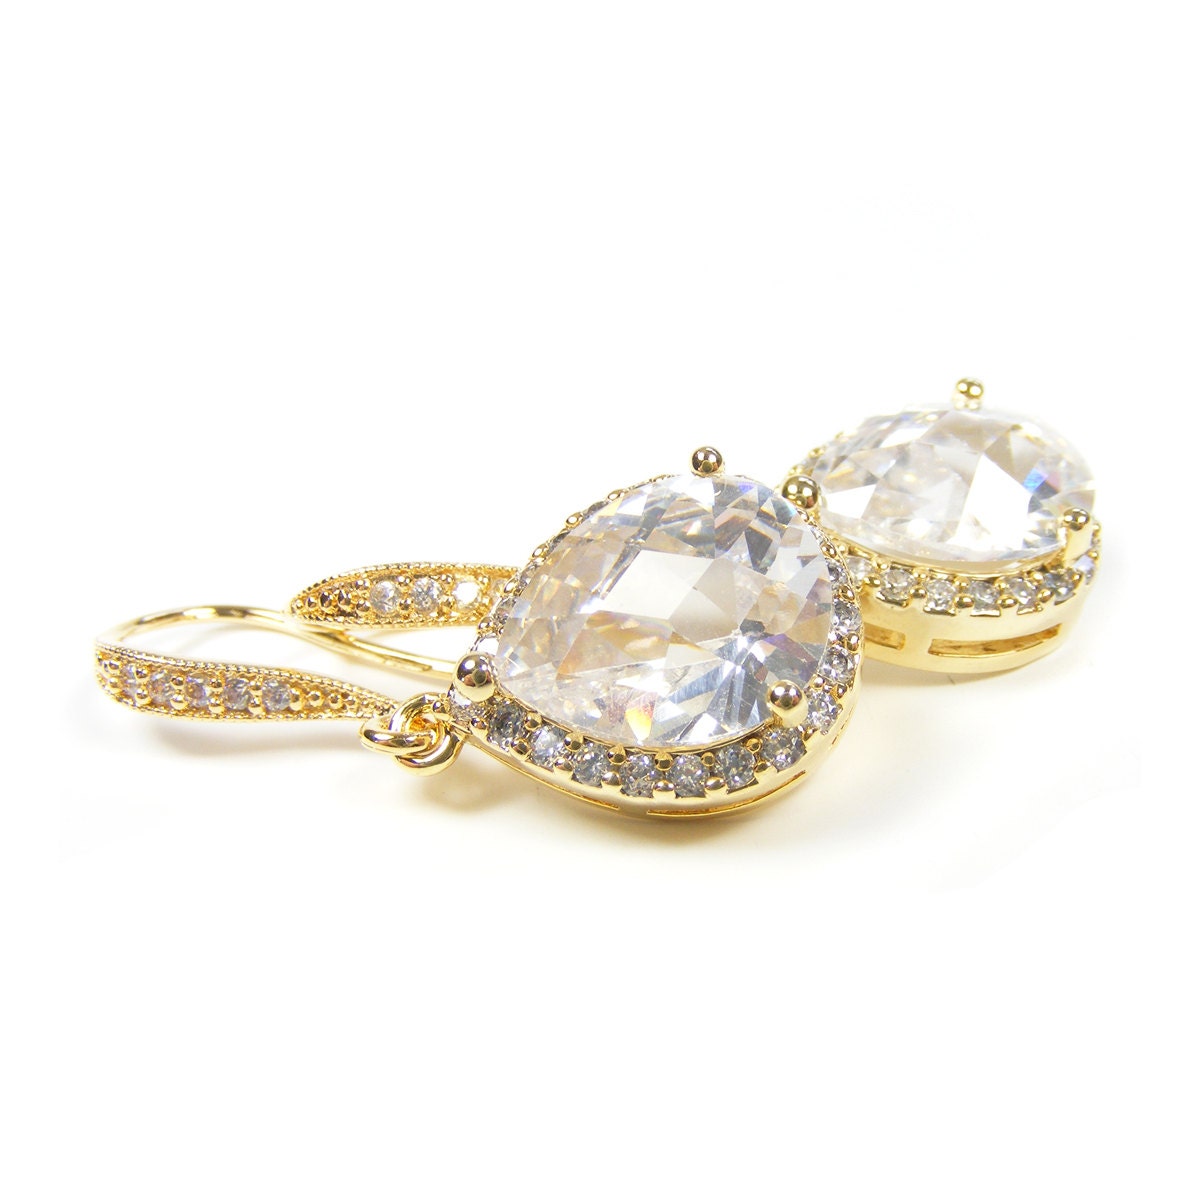 Gold Bridal Earrings, Gold Faceted Crystal Teardrops, Bridesmaid Gifts, Wedding Earrings, Prom Earrings